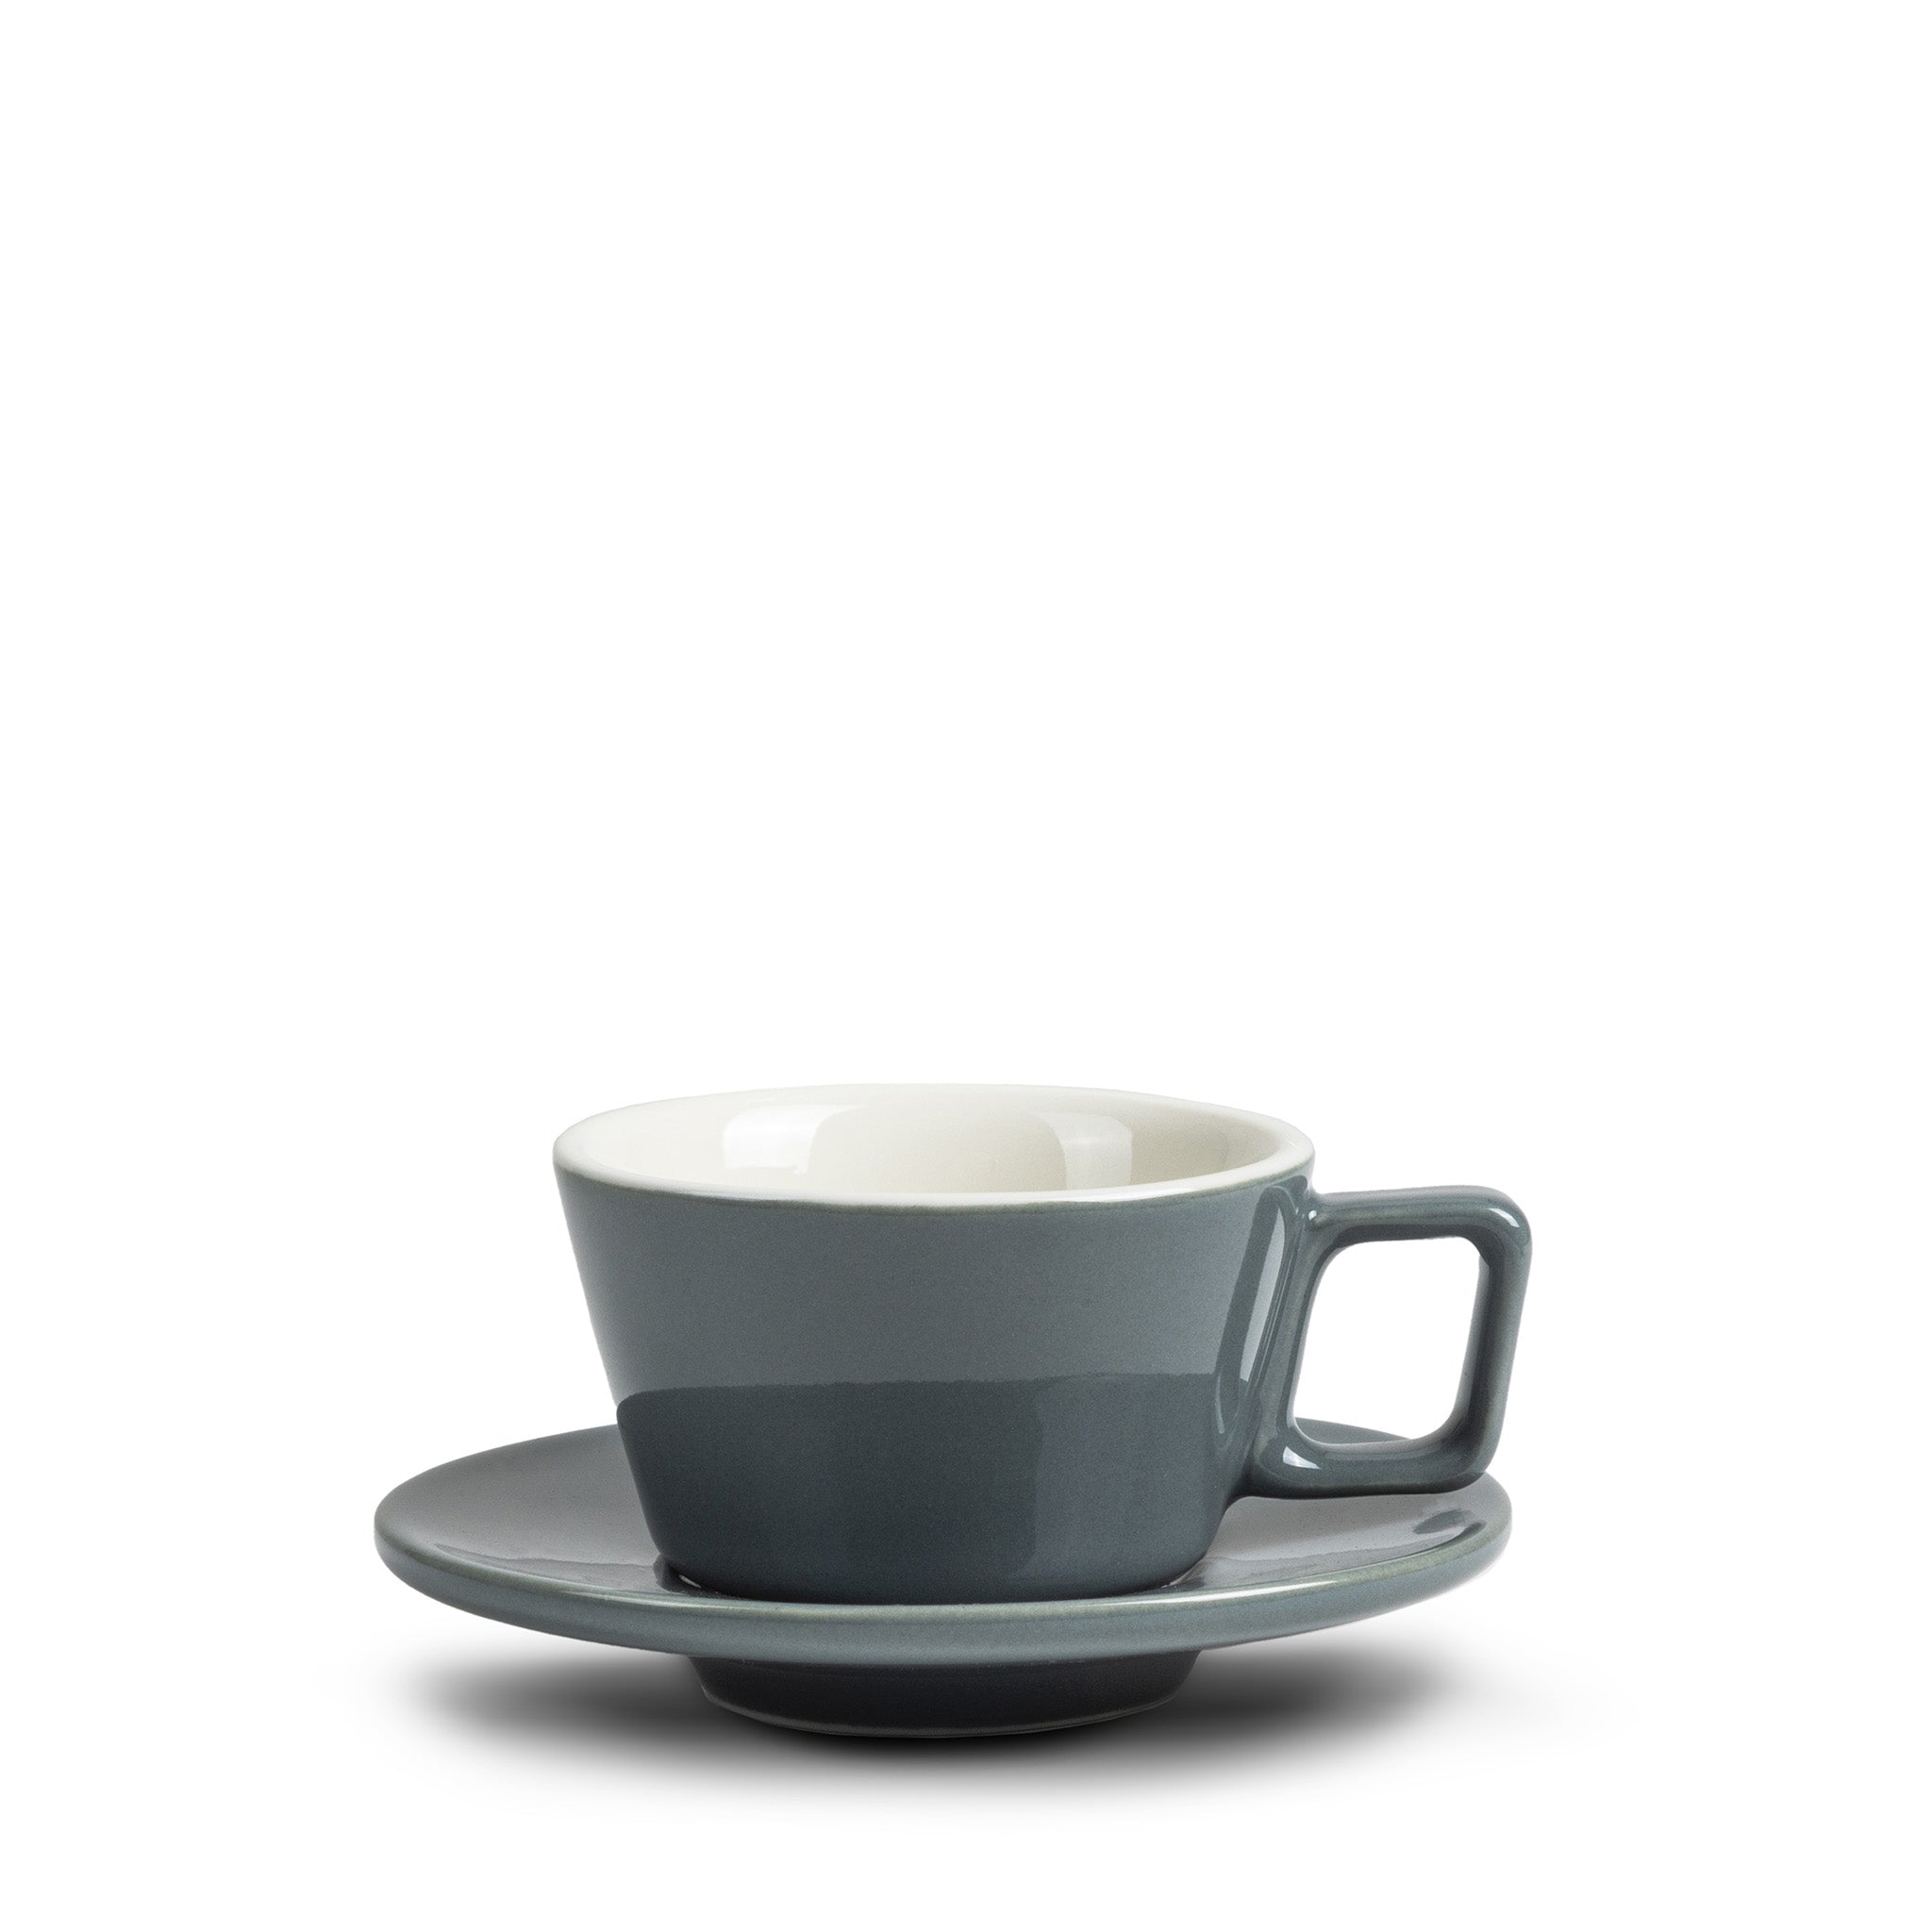 5 Best Espresso Cups - Gear Patrol